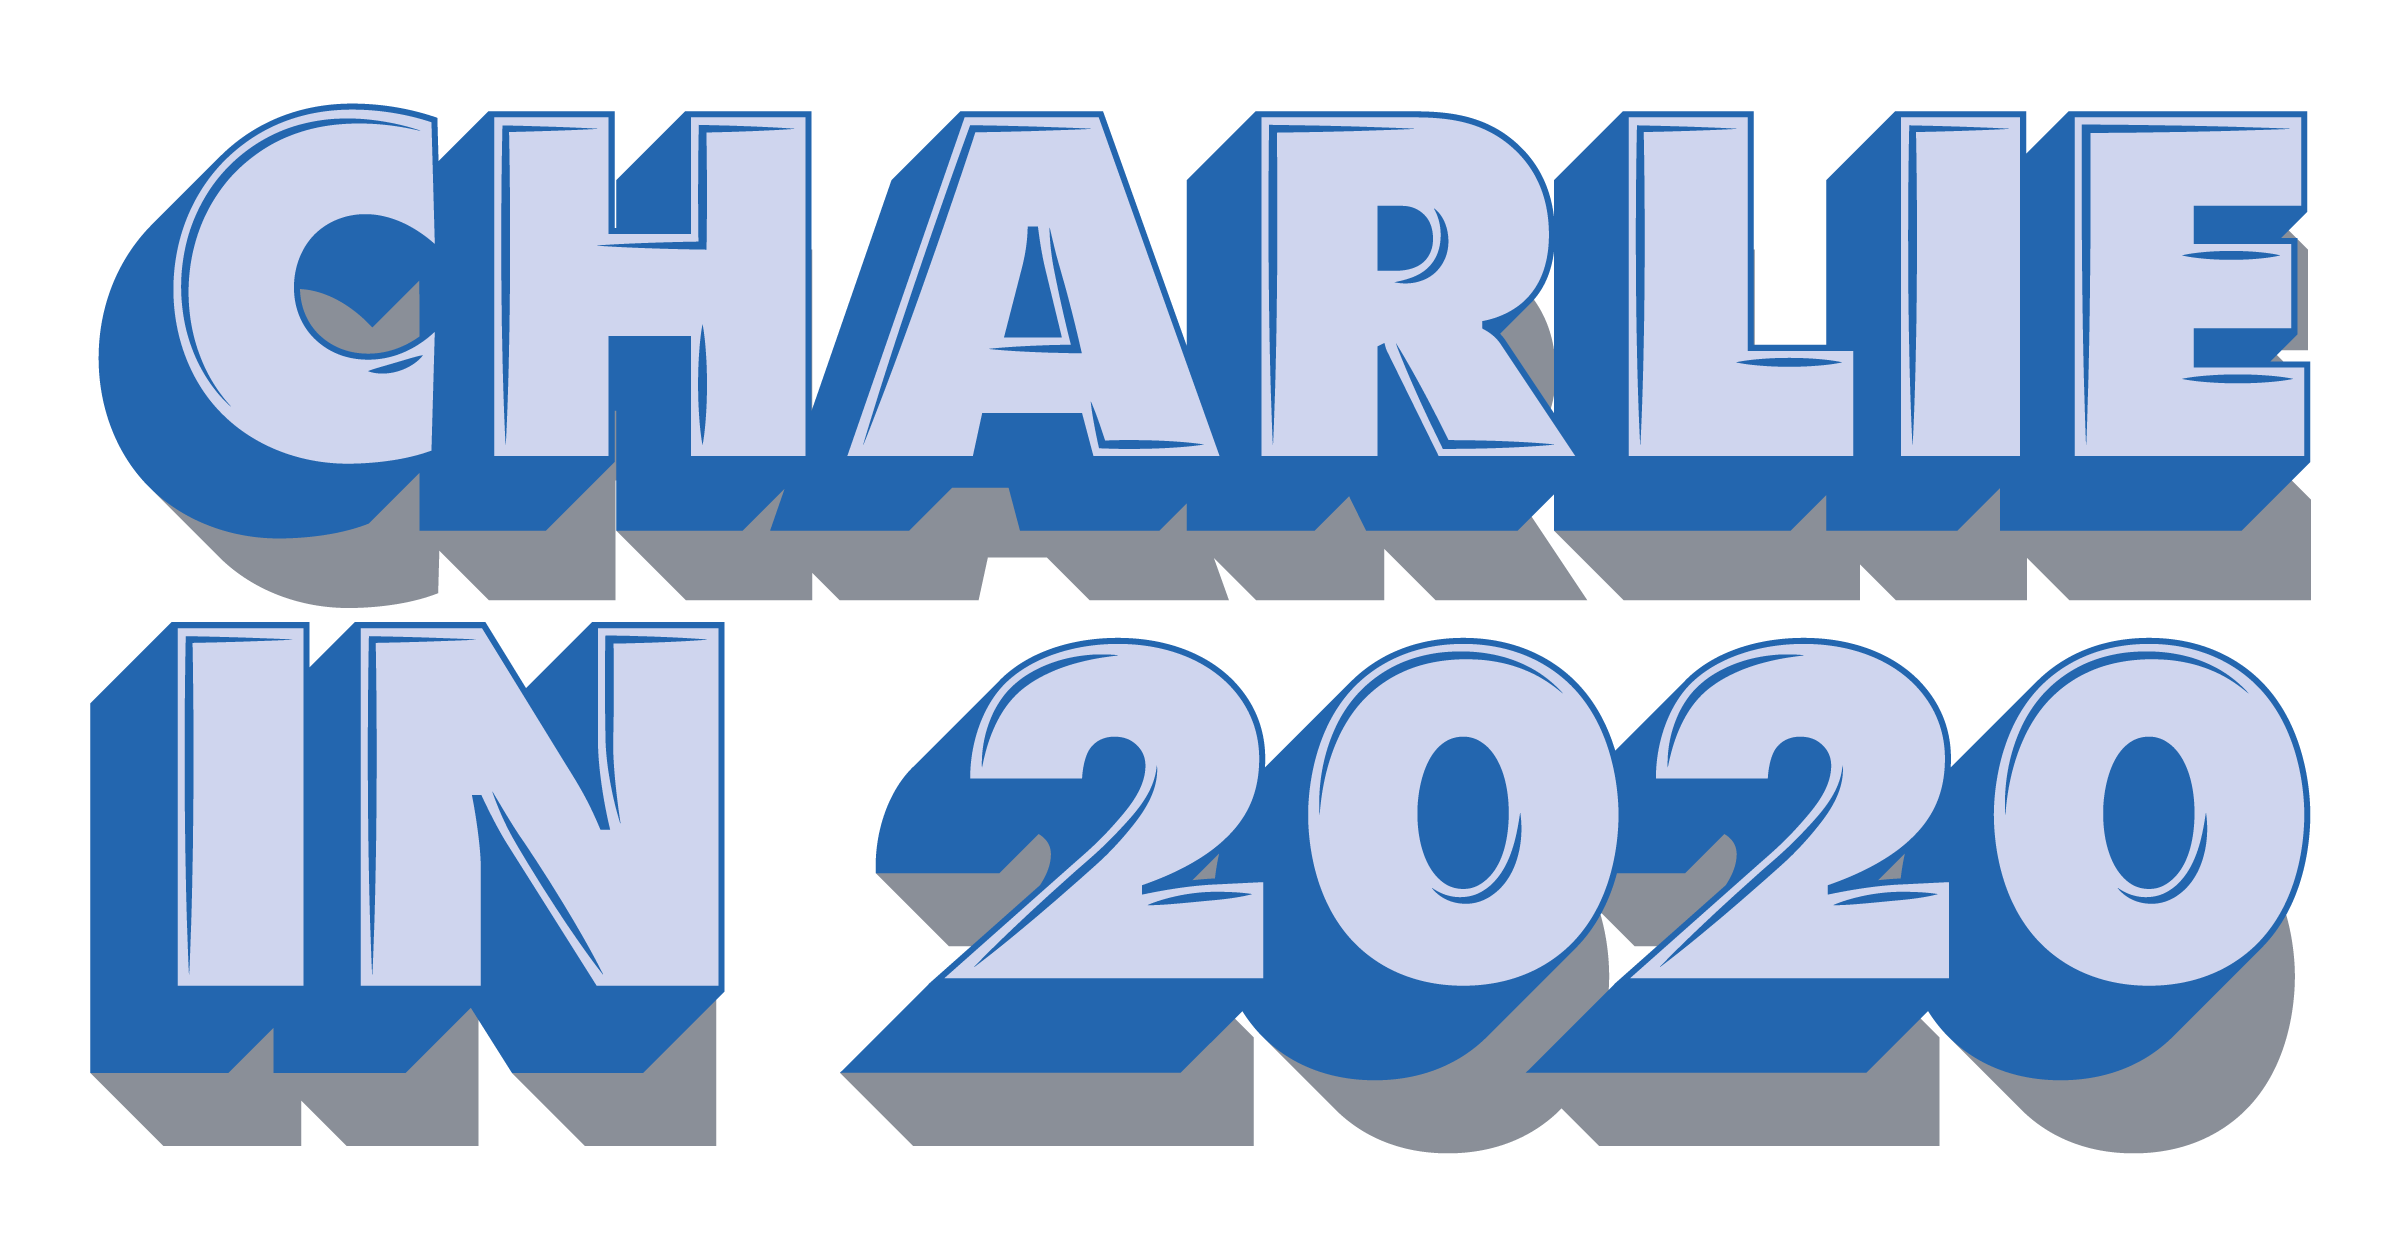 Charlie in 2020